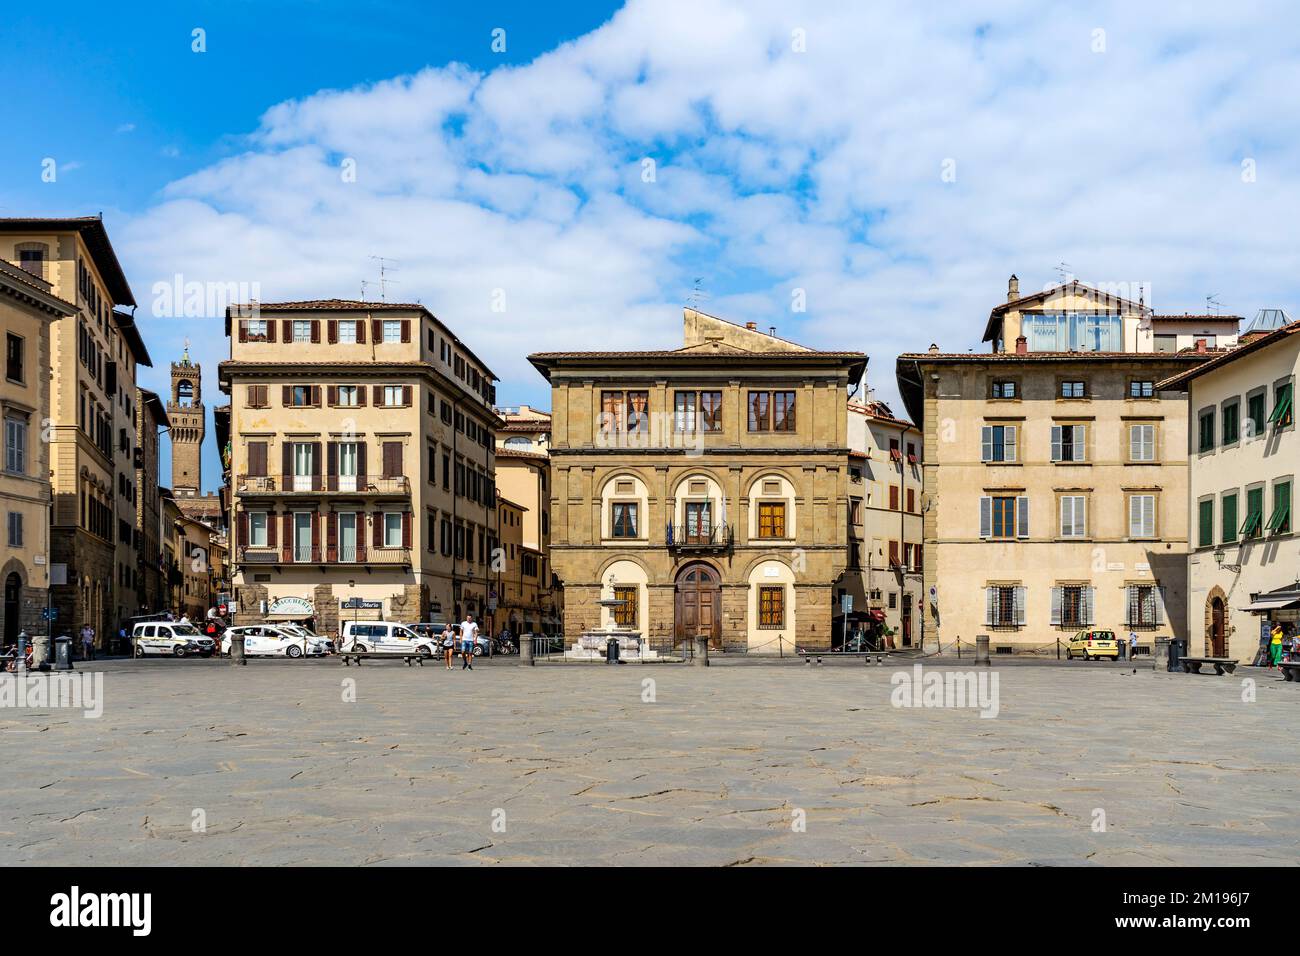 West side of Santa Croce Square with Casa Chiavacci, Palazzo Cocchi-Serristori and Casa Diluvio, Florence city center, Tuscany region, Italy Stock Photo